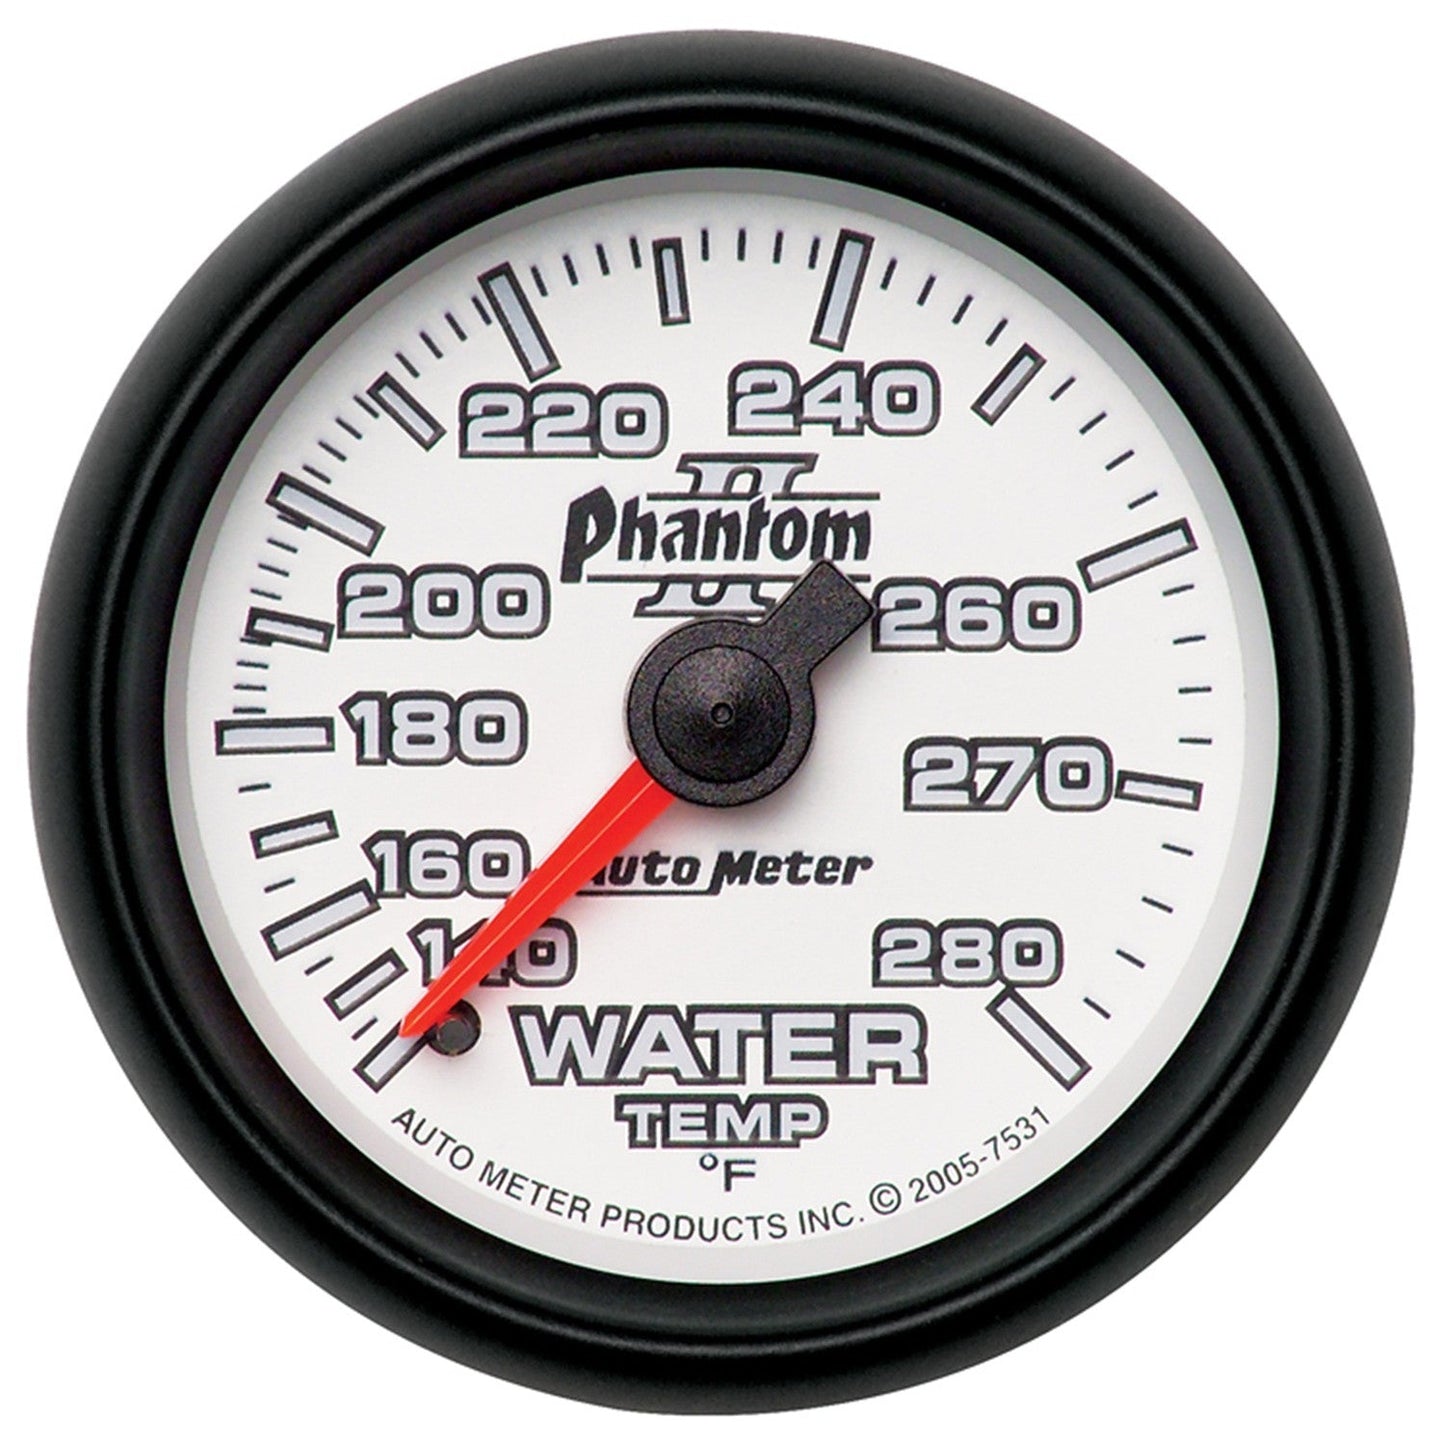 AutoMeter - 2-1/16" WATER TEMPERATURE, 140-280 °F, 6 FT., MECHANICAL, PHANTOM II (7531)